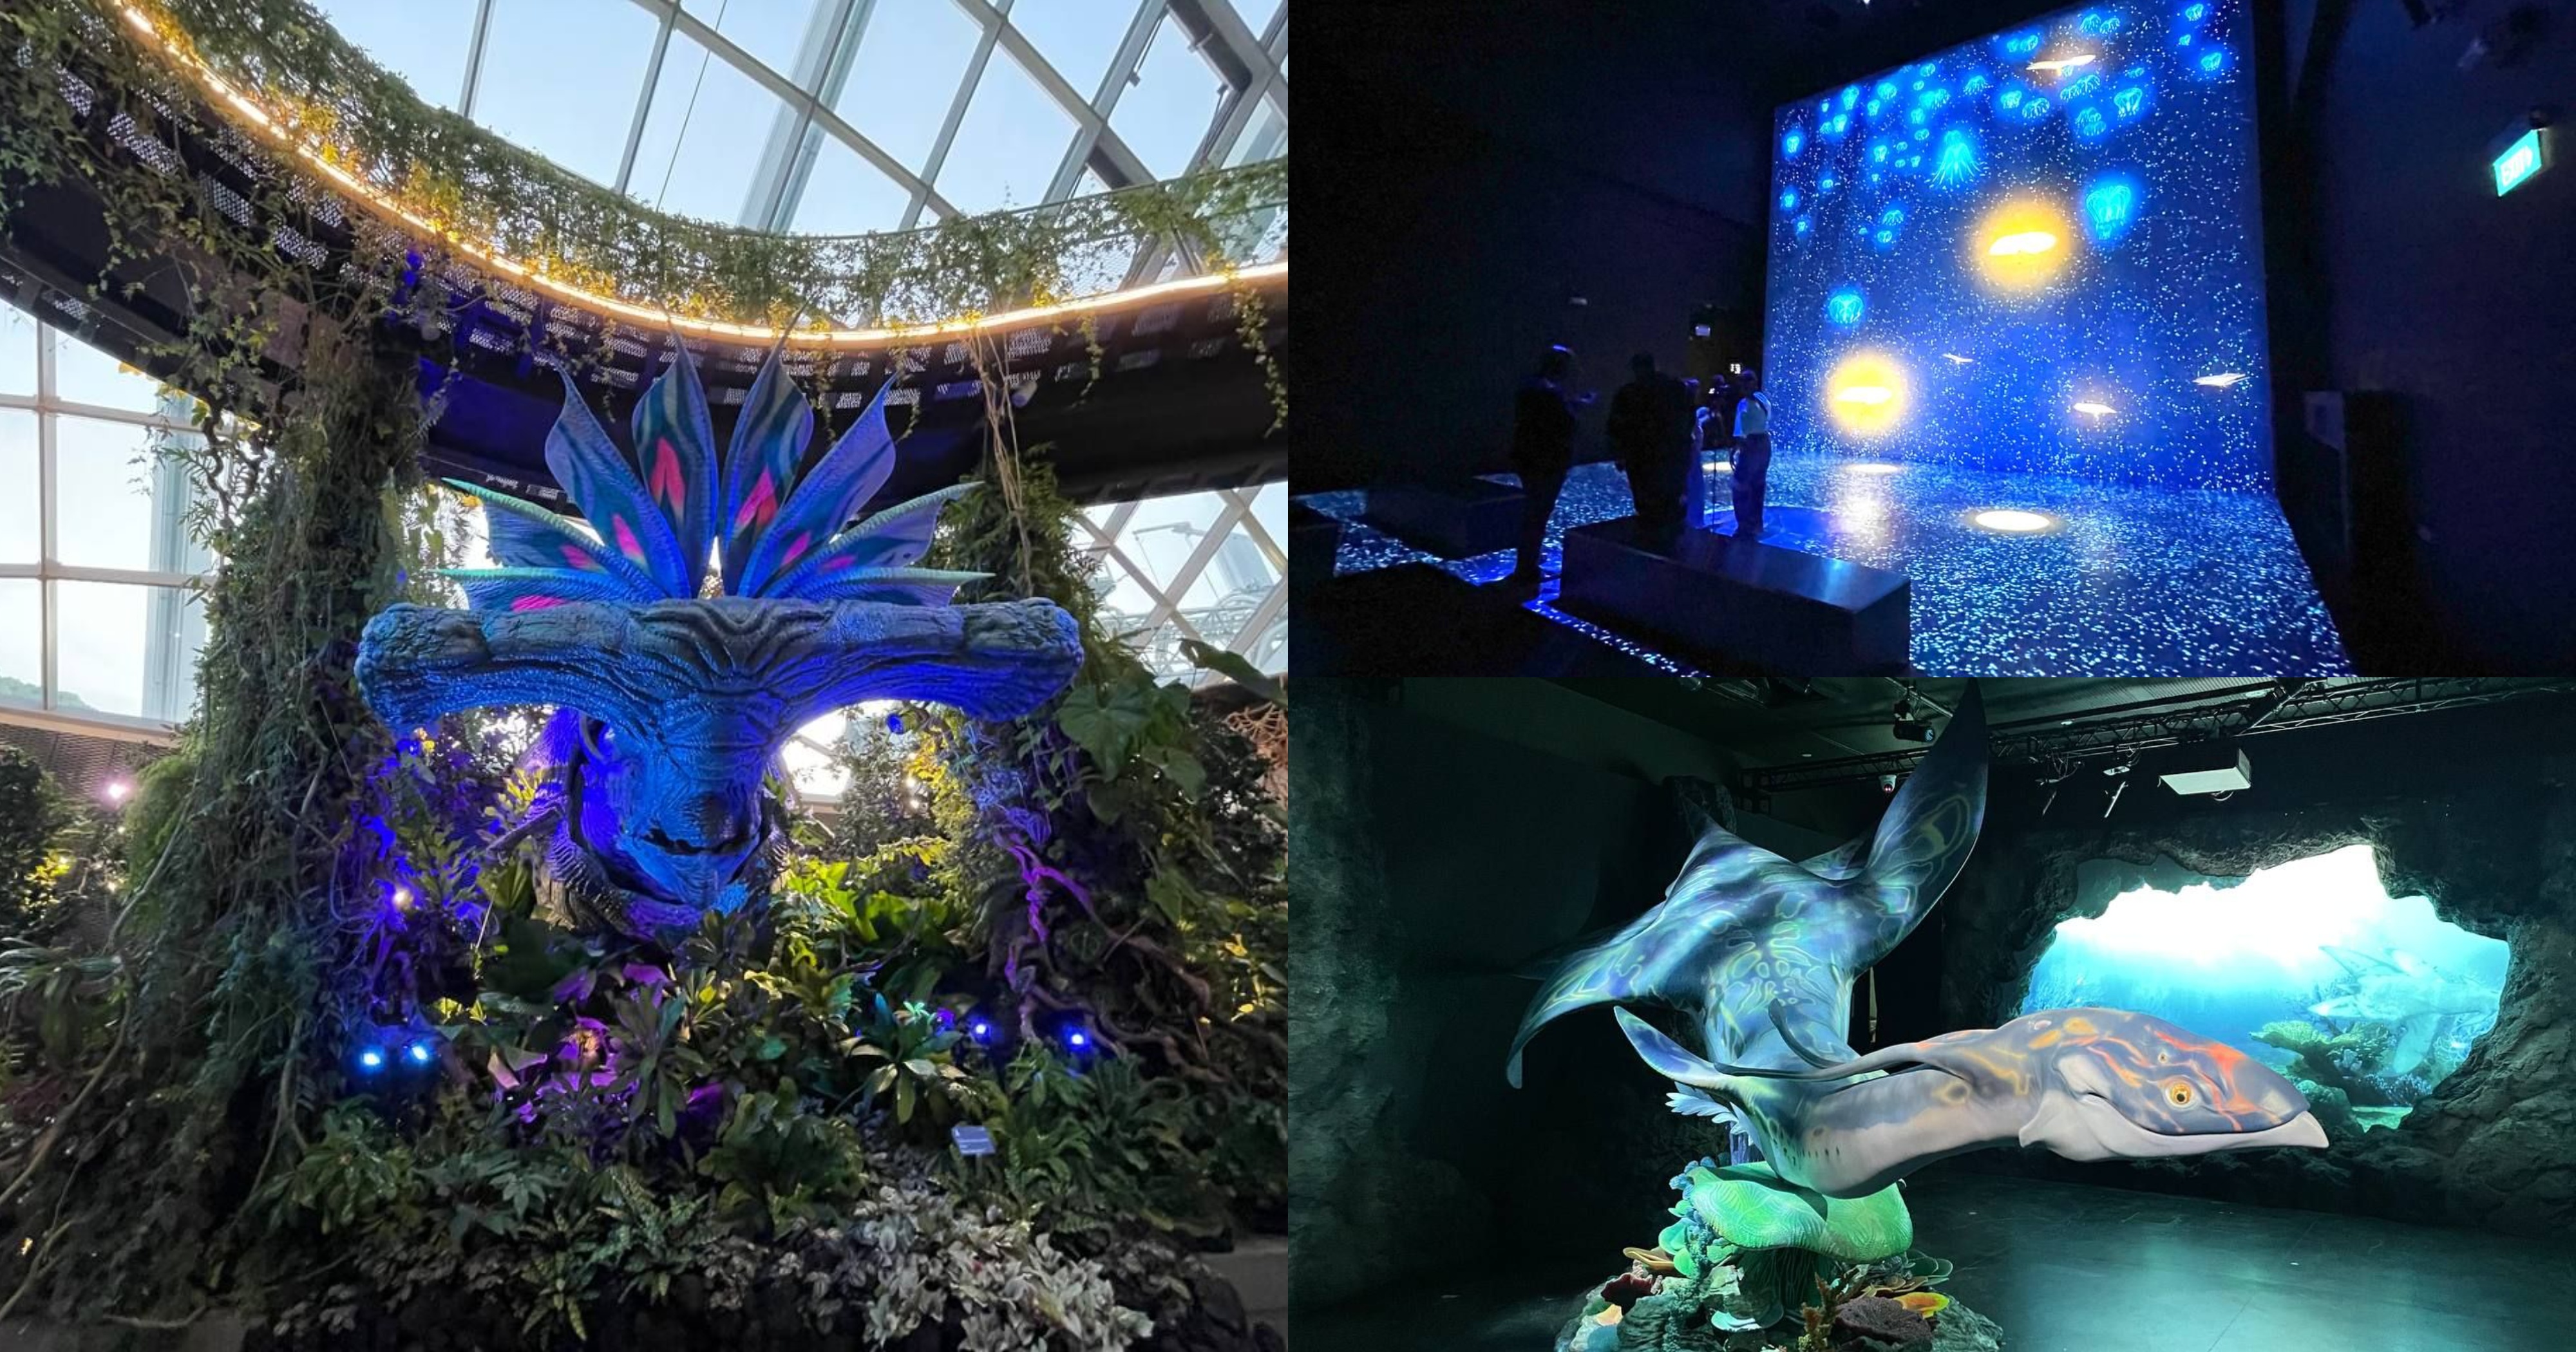 Avatar The Exhibition at Shanghai Disney Resort  Avatarcom